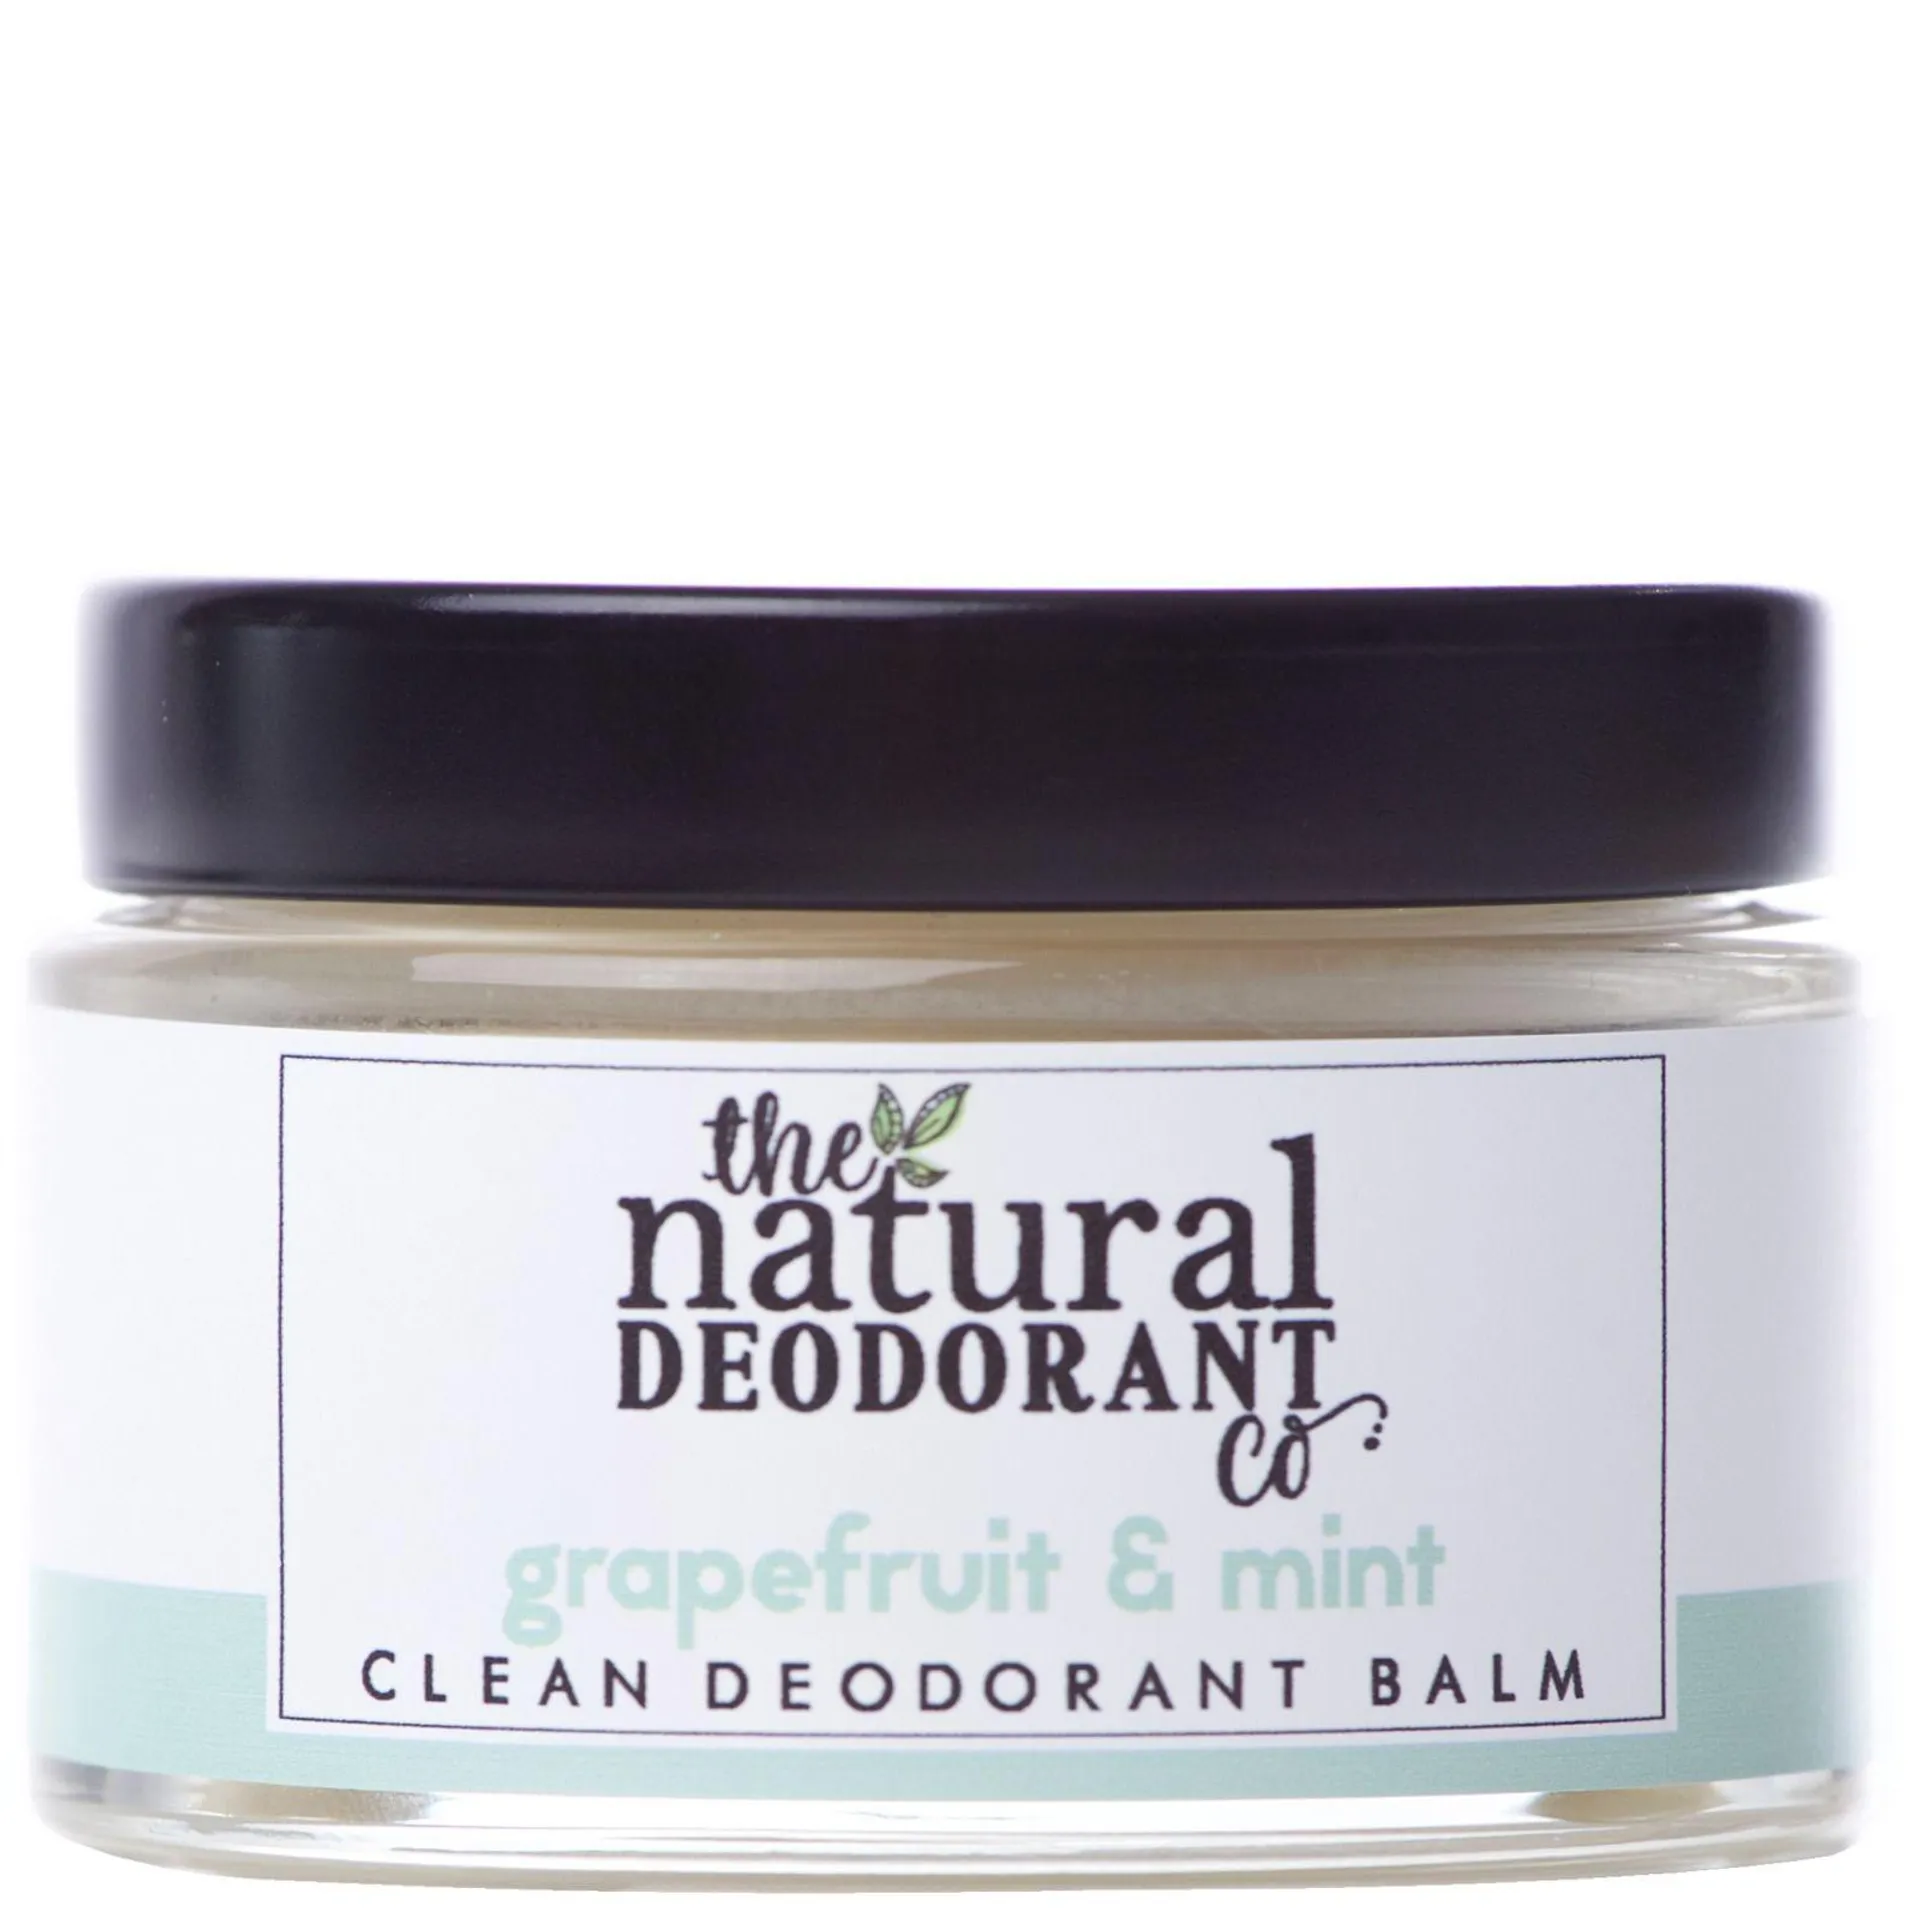 The Natural Deodorant Co. Clean Deodorant Balm